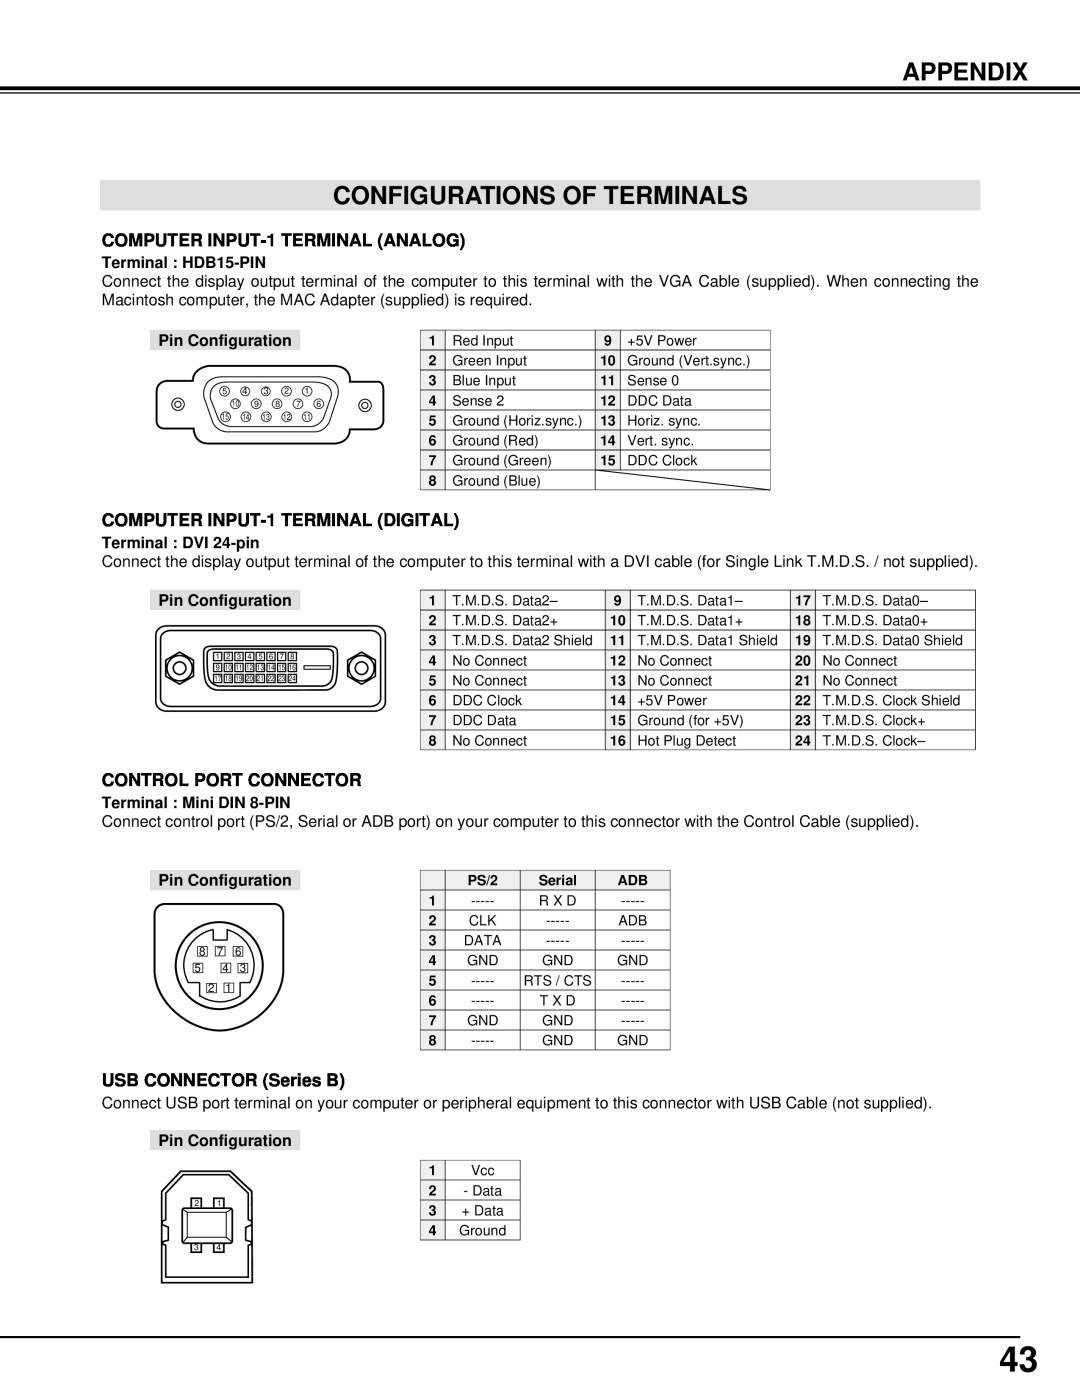 Christie Digital Systems 38-VIV205-01 Appendix Configurations Of Terminals, Terminal HDB15-PIN, Pin Configuration 